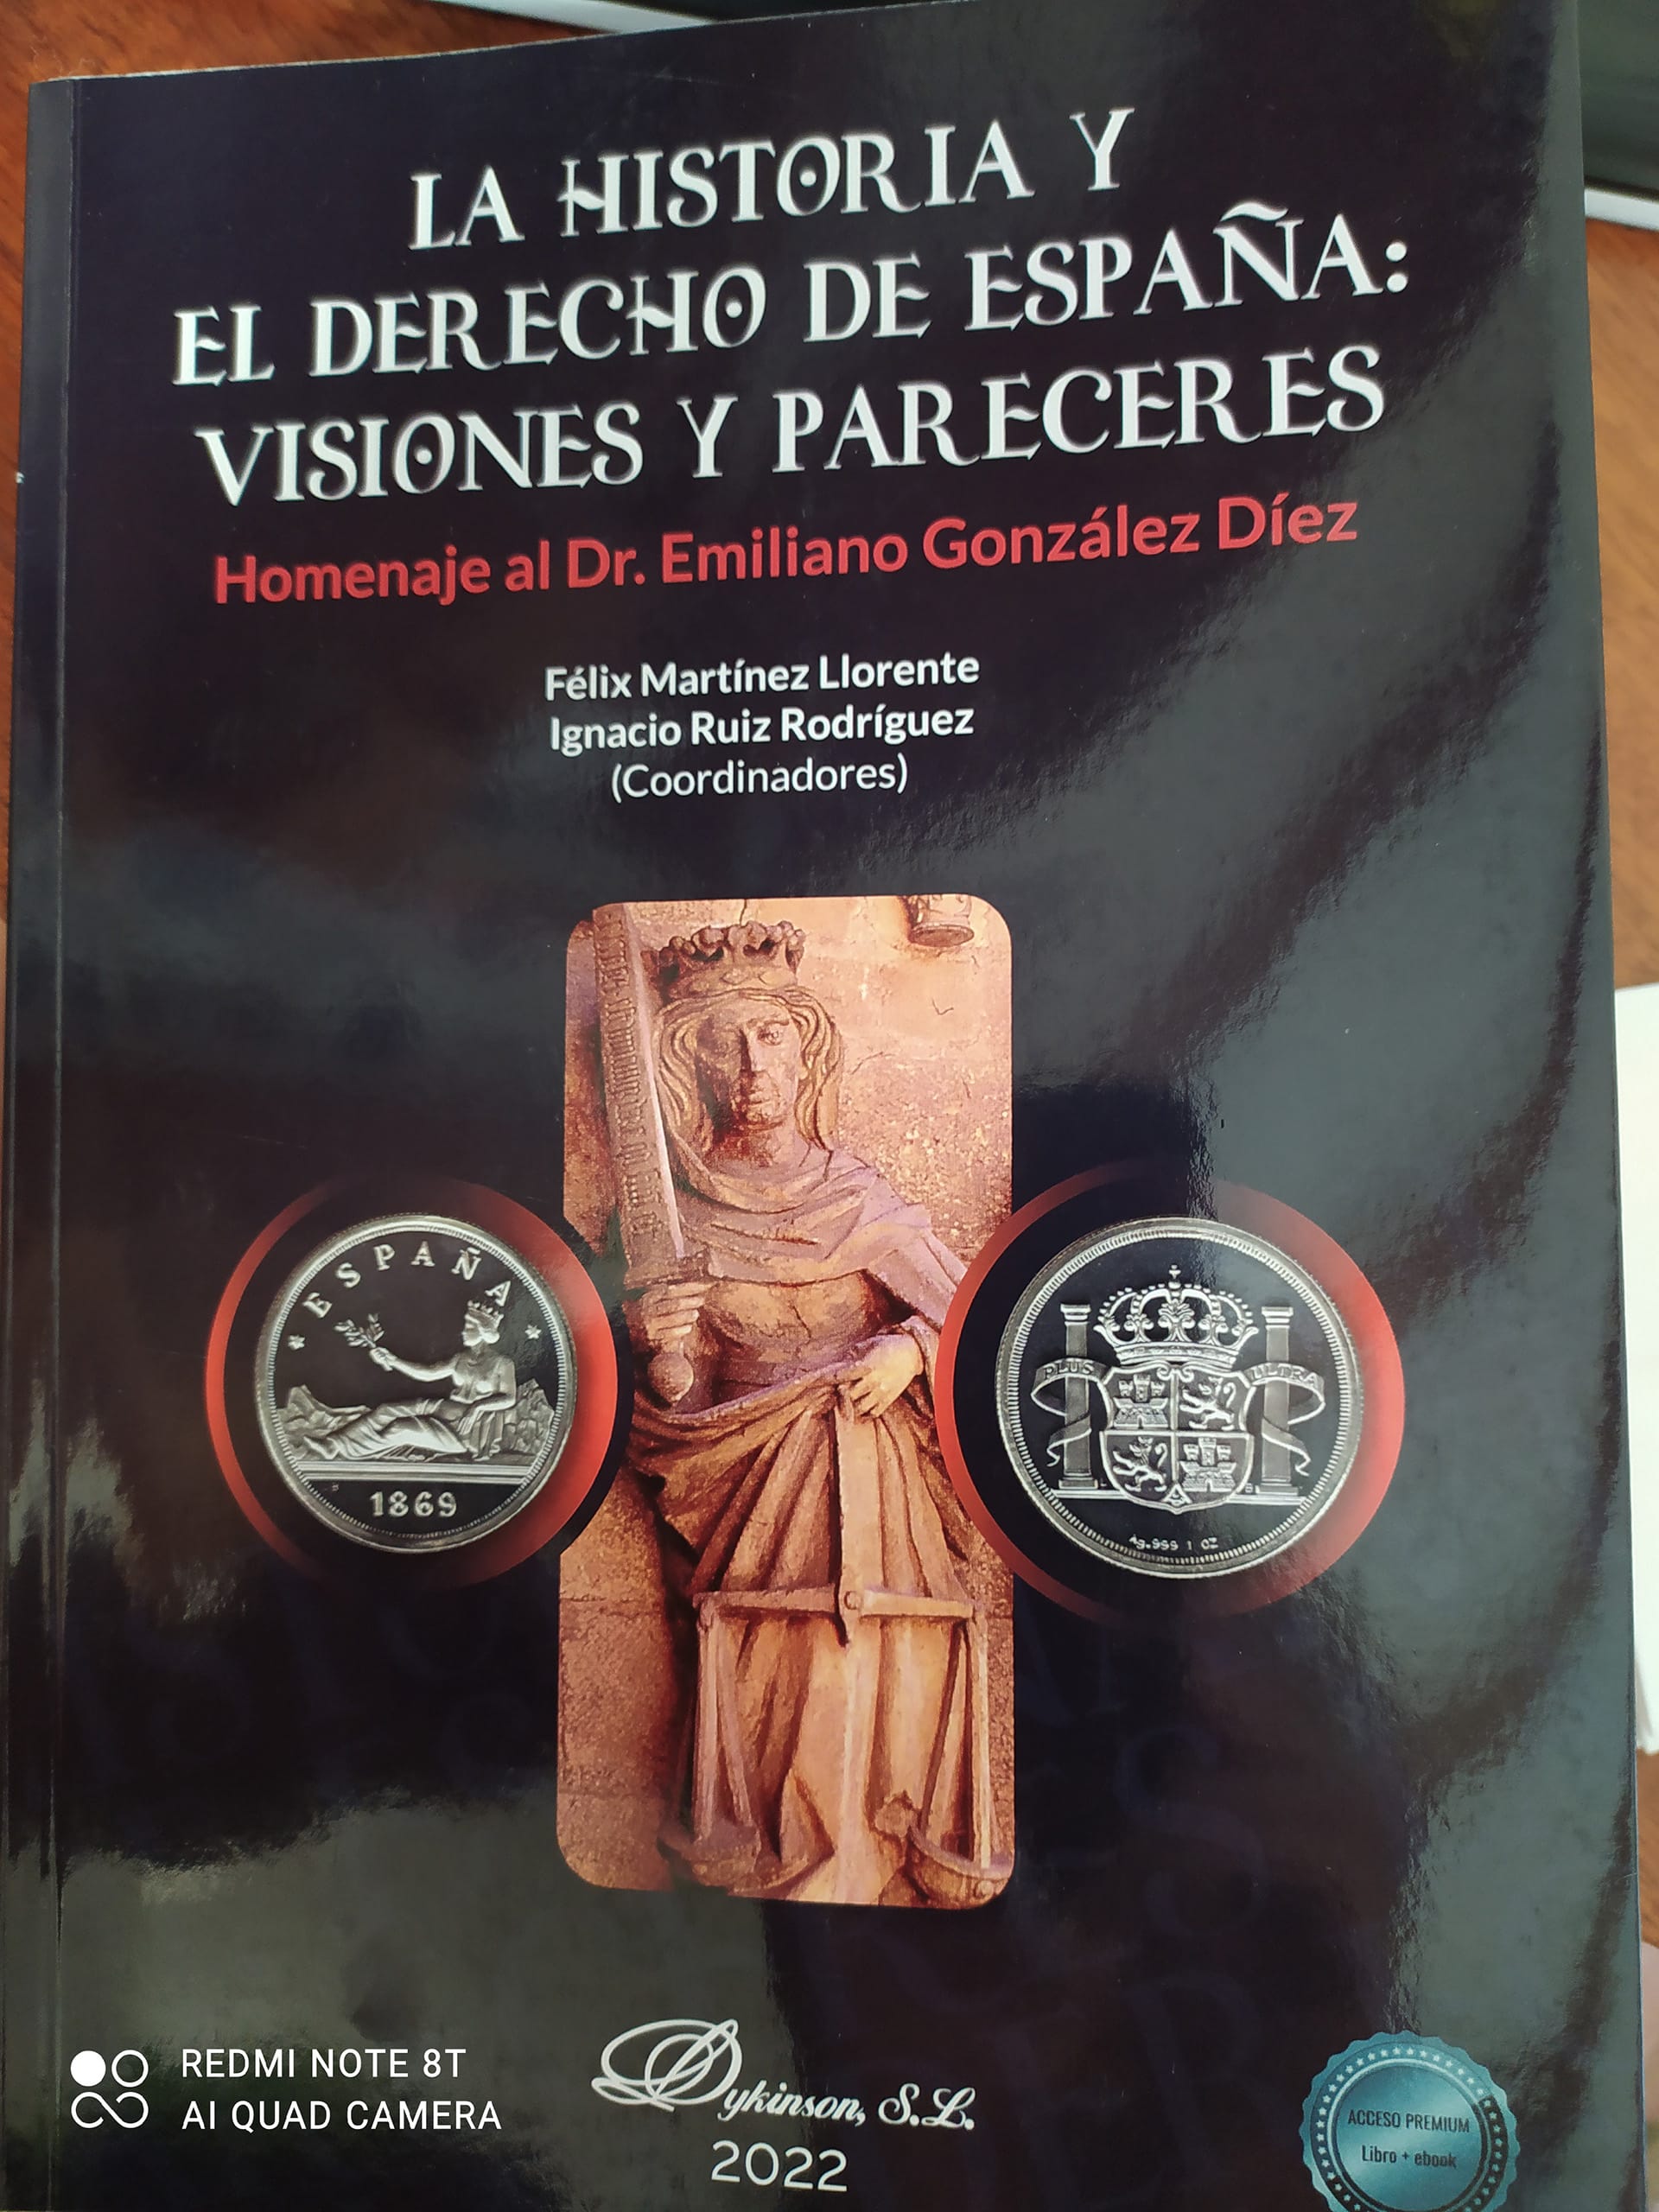 Homenaje al Catedrático de Historia del Derecho Don Emiliano González Díez